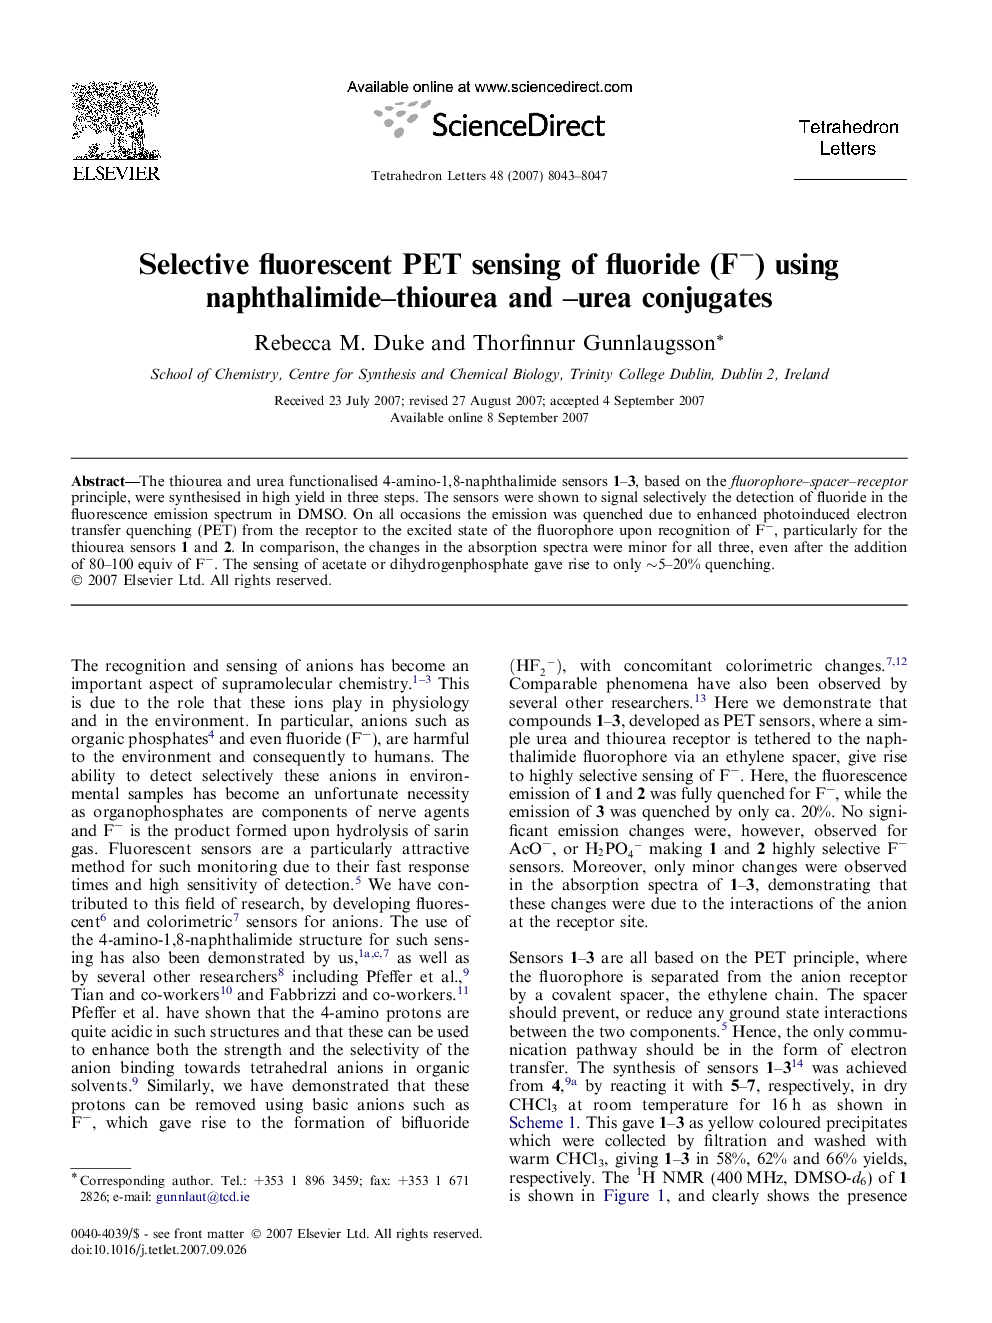 Selective fluorescent PET sensing of fluoride (Fâ) using naphthalimide-thiourea and -urea conjugates